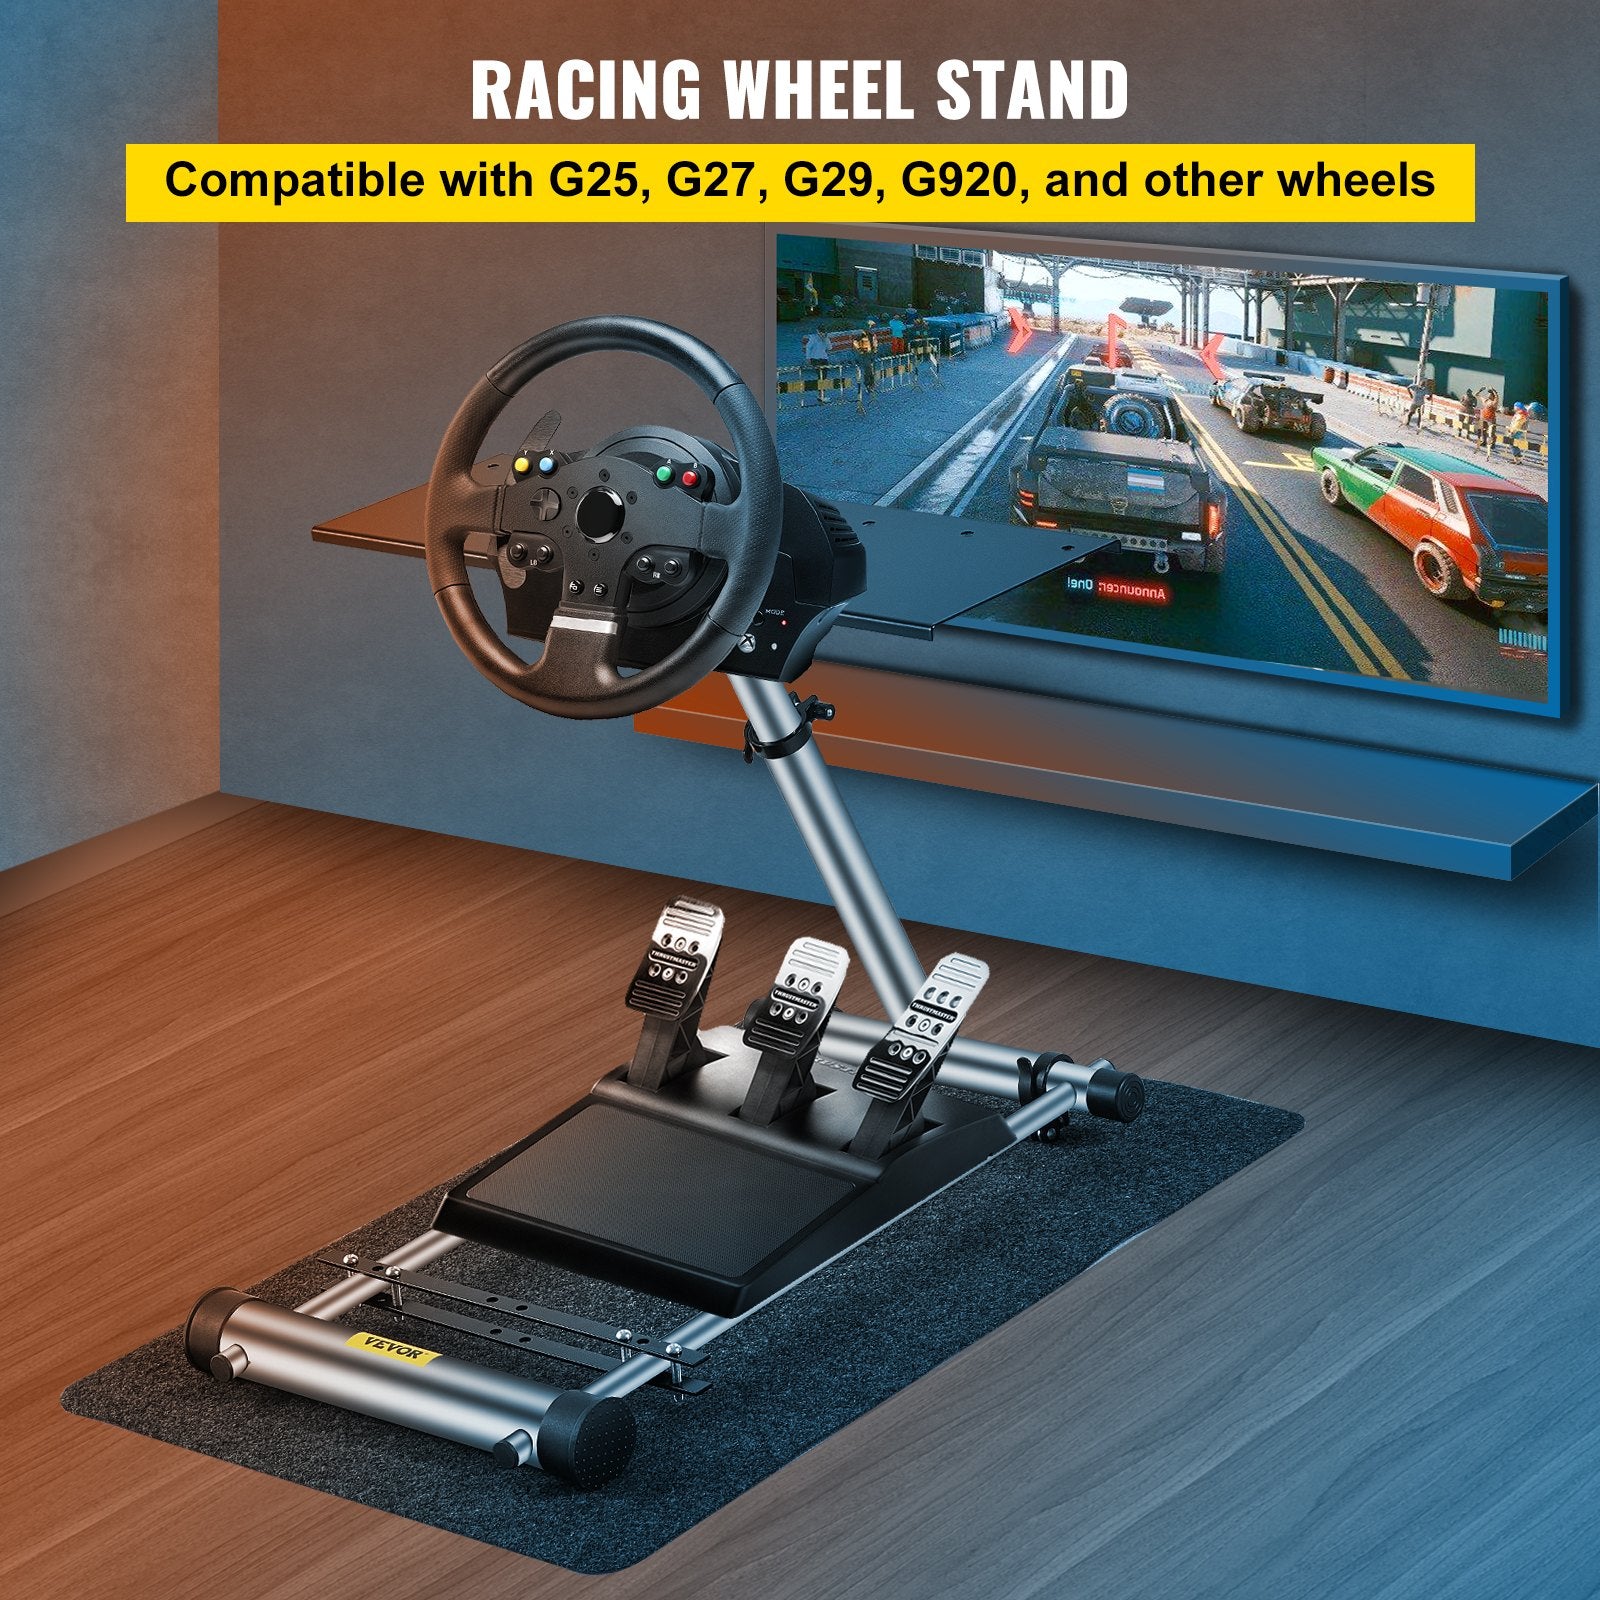 Soldes Wheel stand pro Support Pro pour Logitech G29/G920/G27/G25